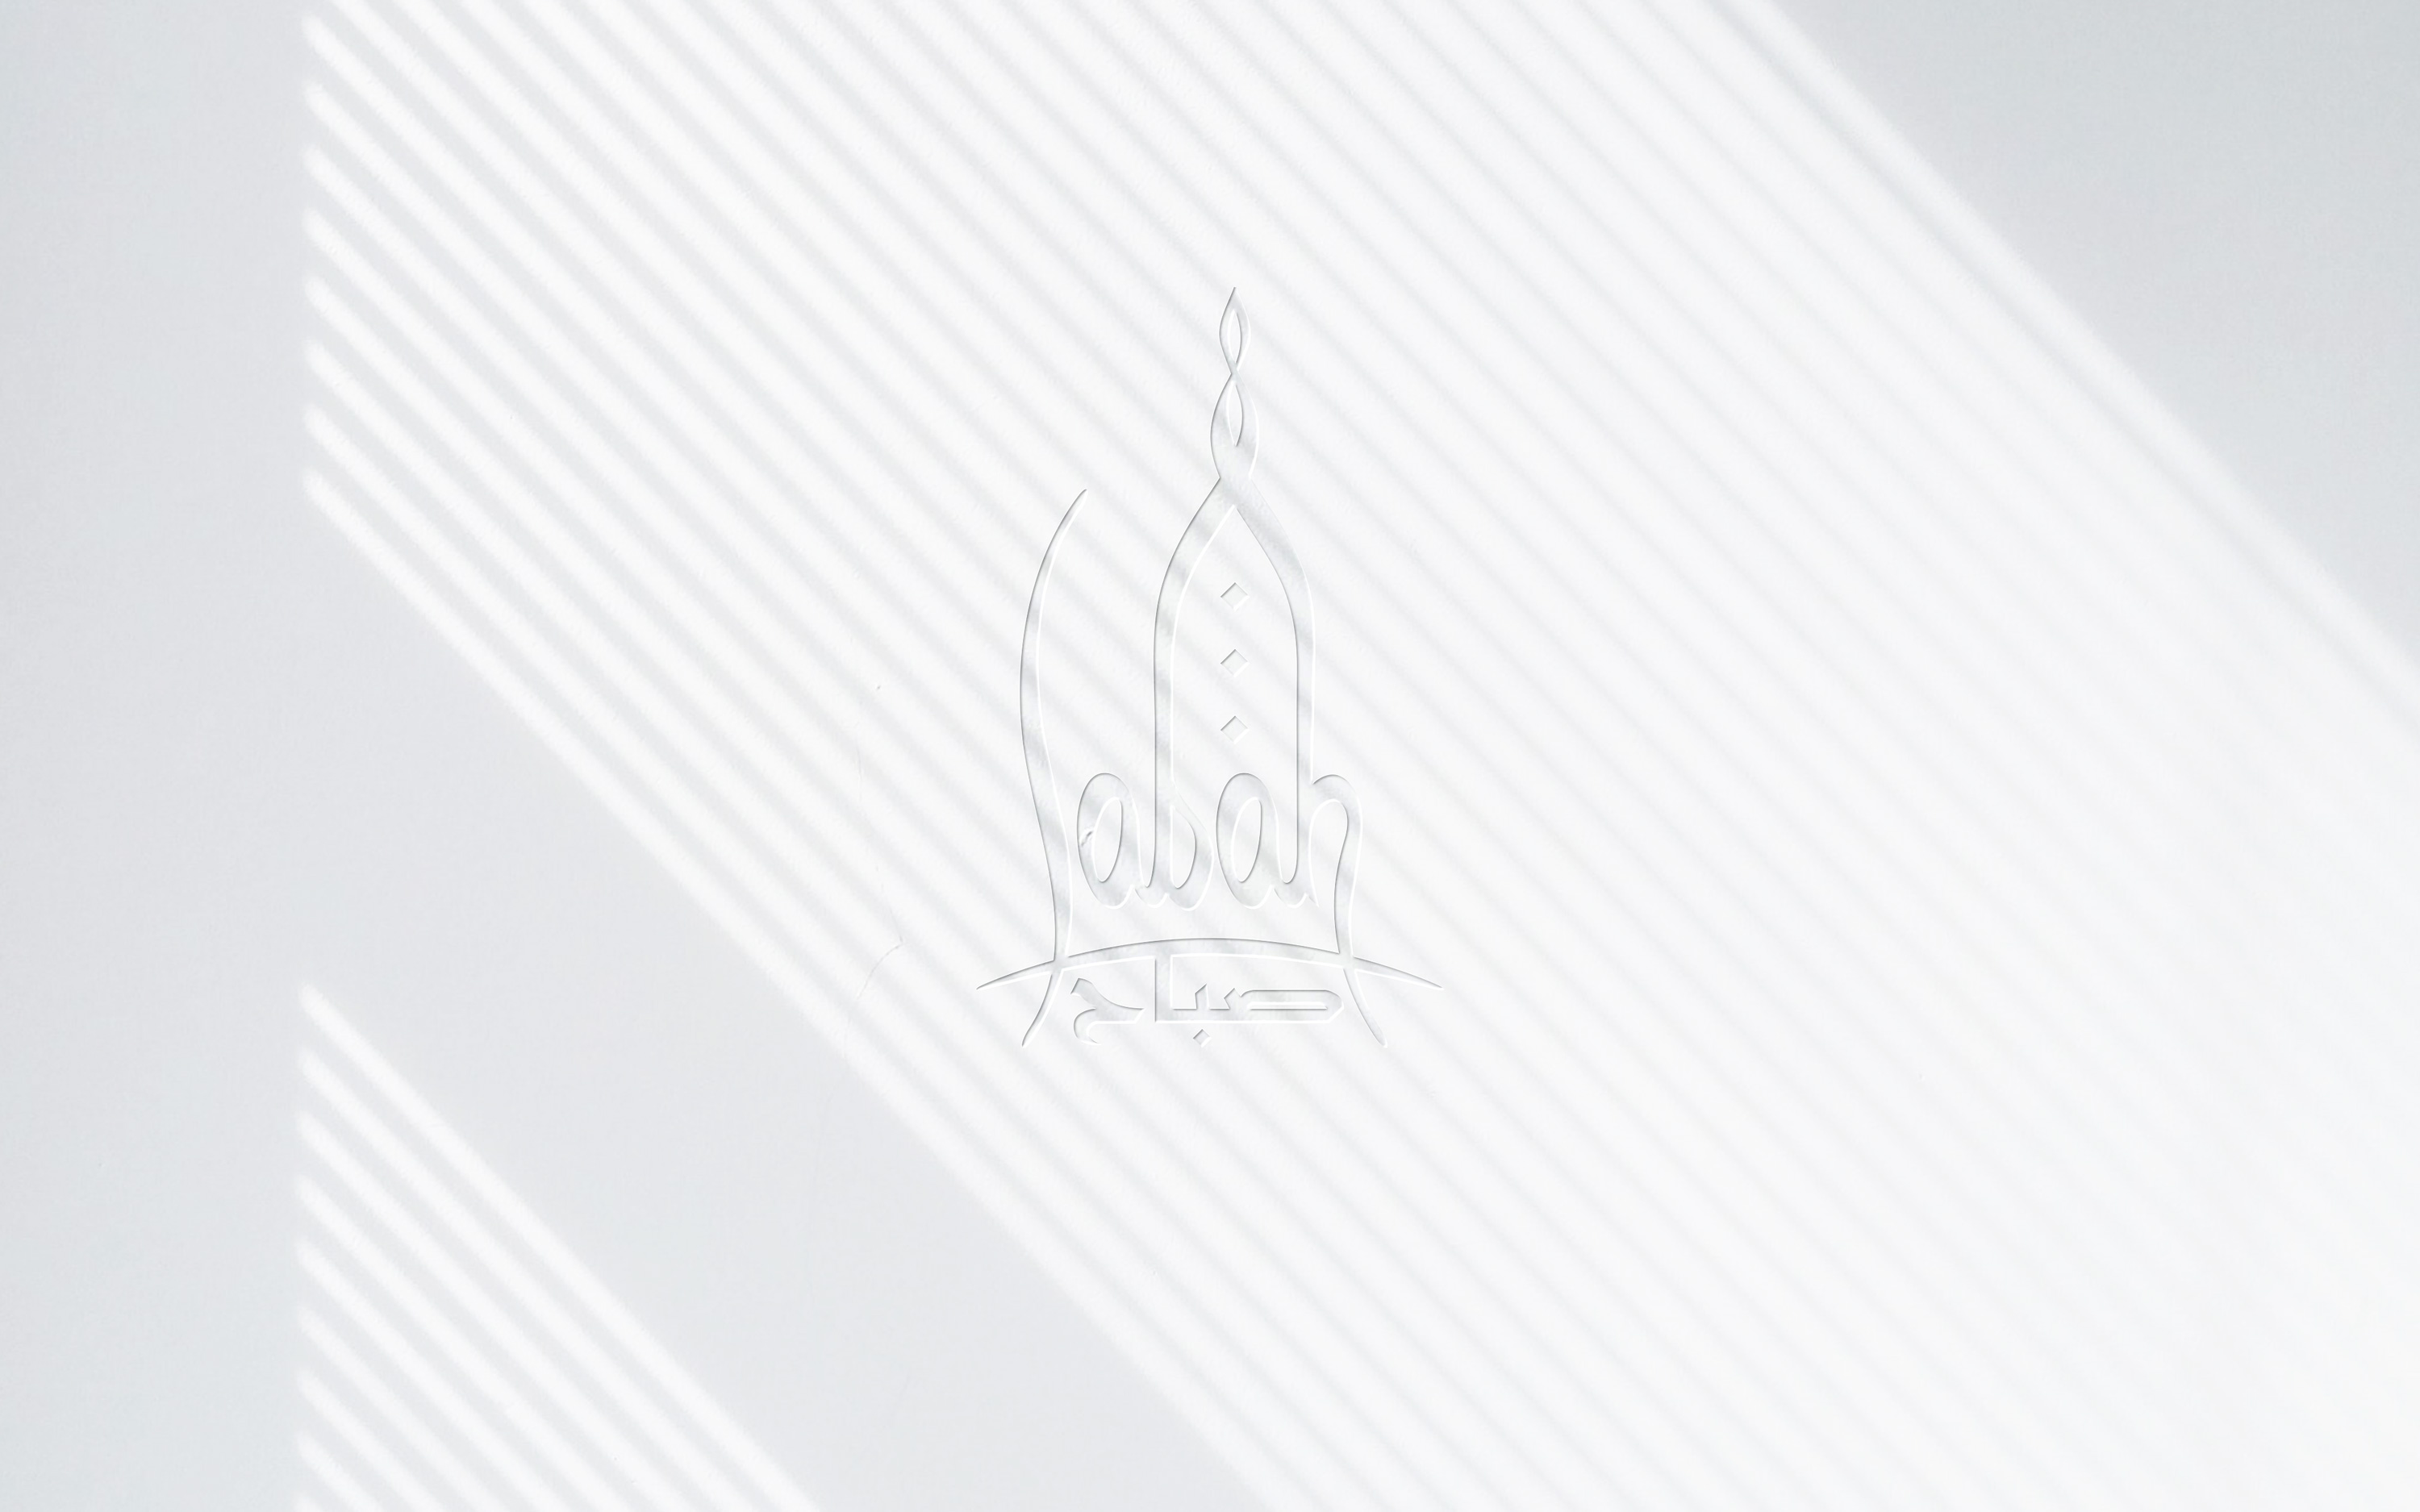 Sabah. Logo for a Dubai based trading company